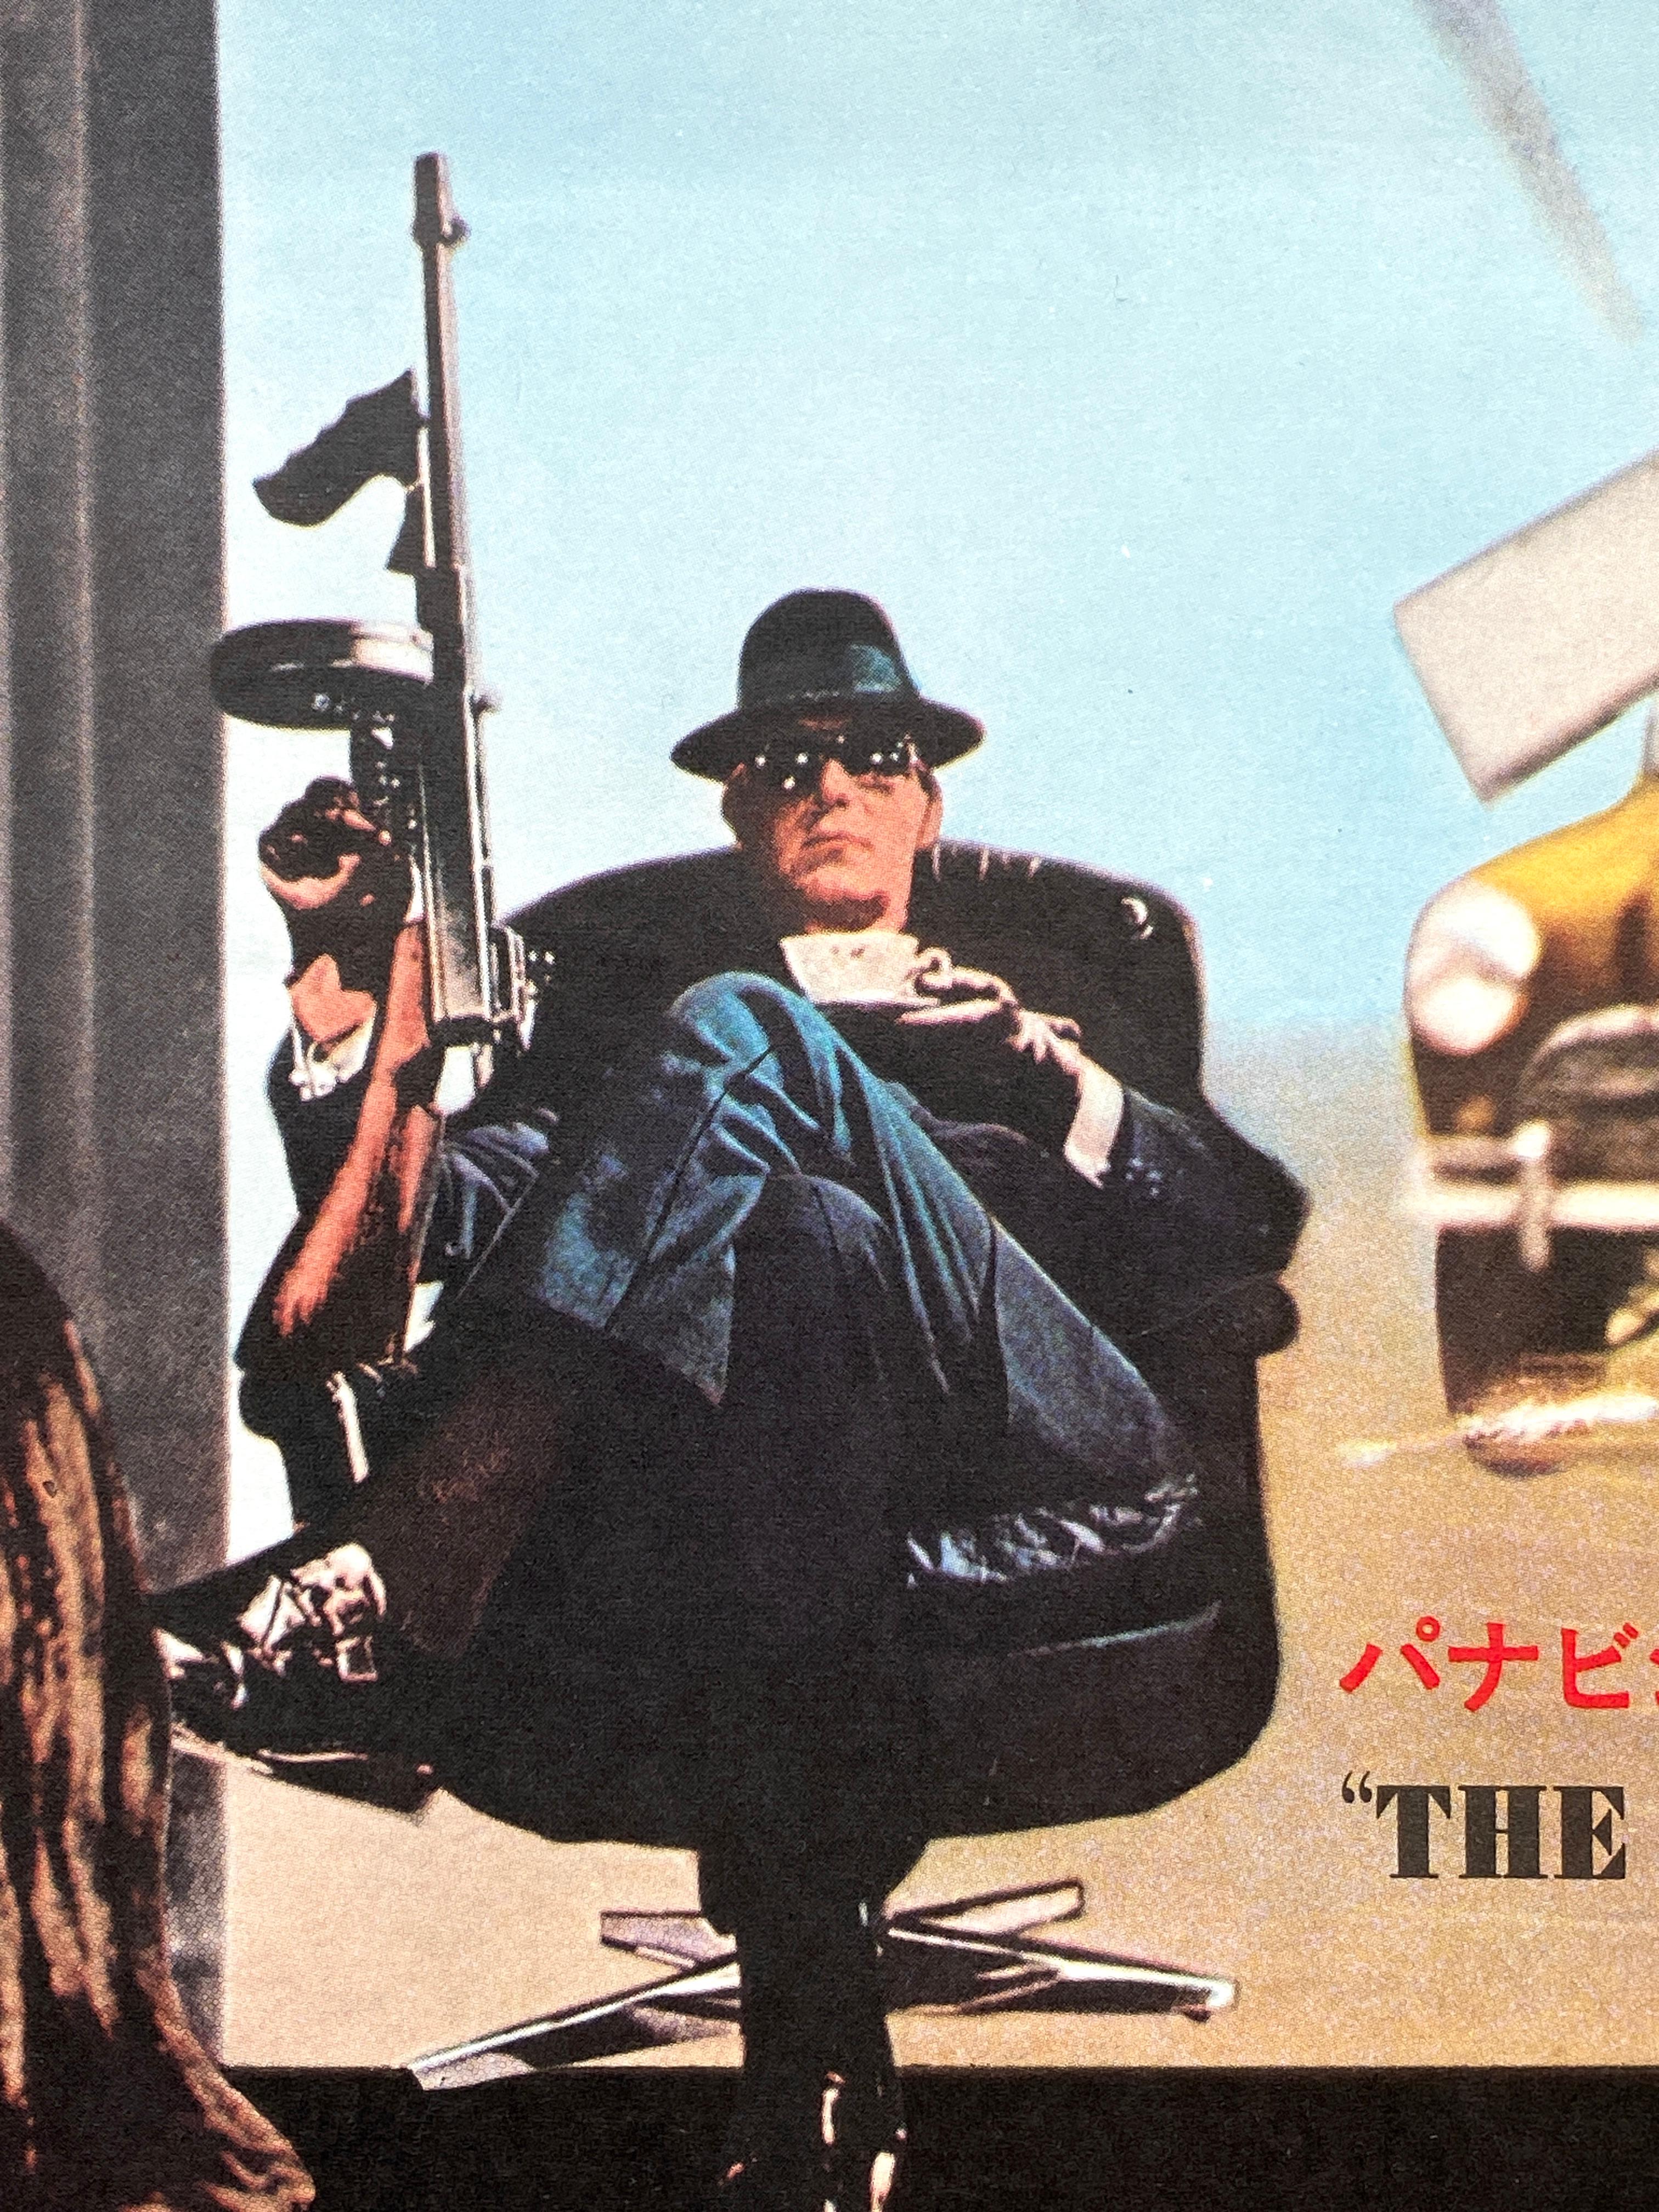 Paper 'The Italian Job' Original Vintage Japanese B2 Movie Poster, 1969 For Sale